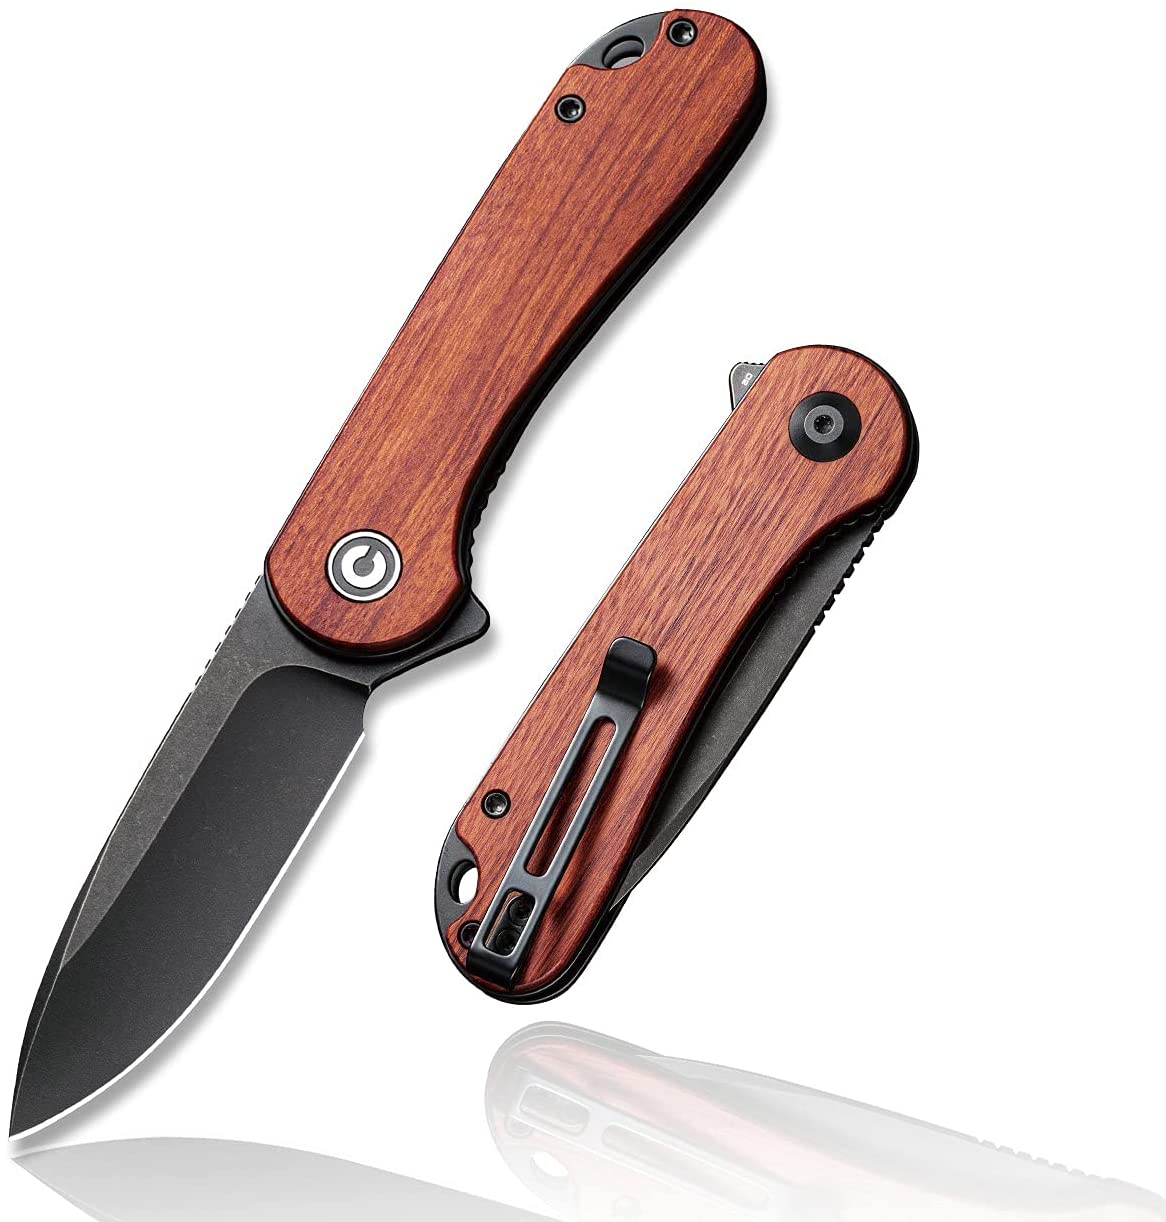 CIVIVI Elementum Knife, Black Blade + Cuibourtia Wood Handle #C907U